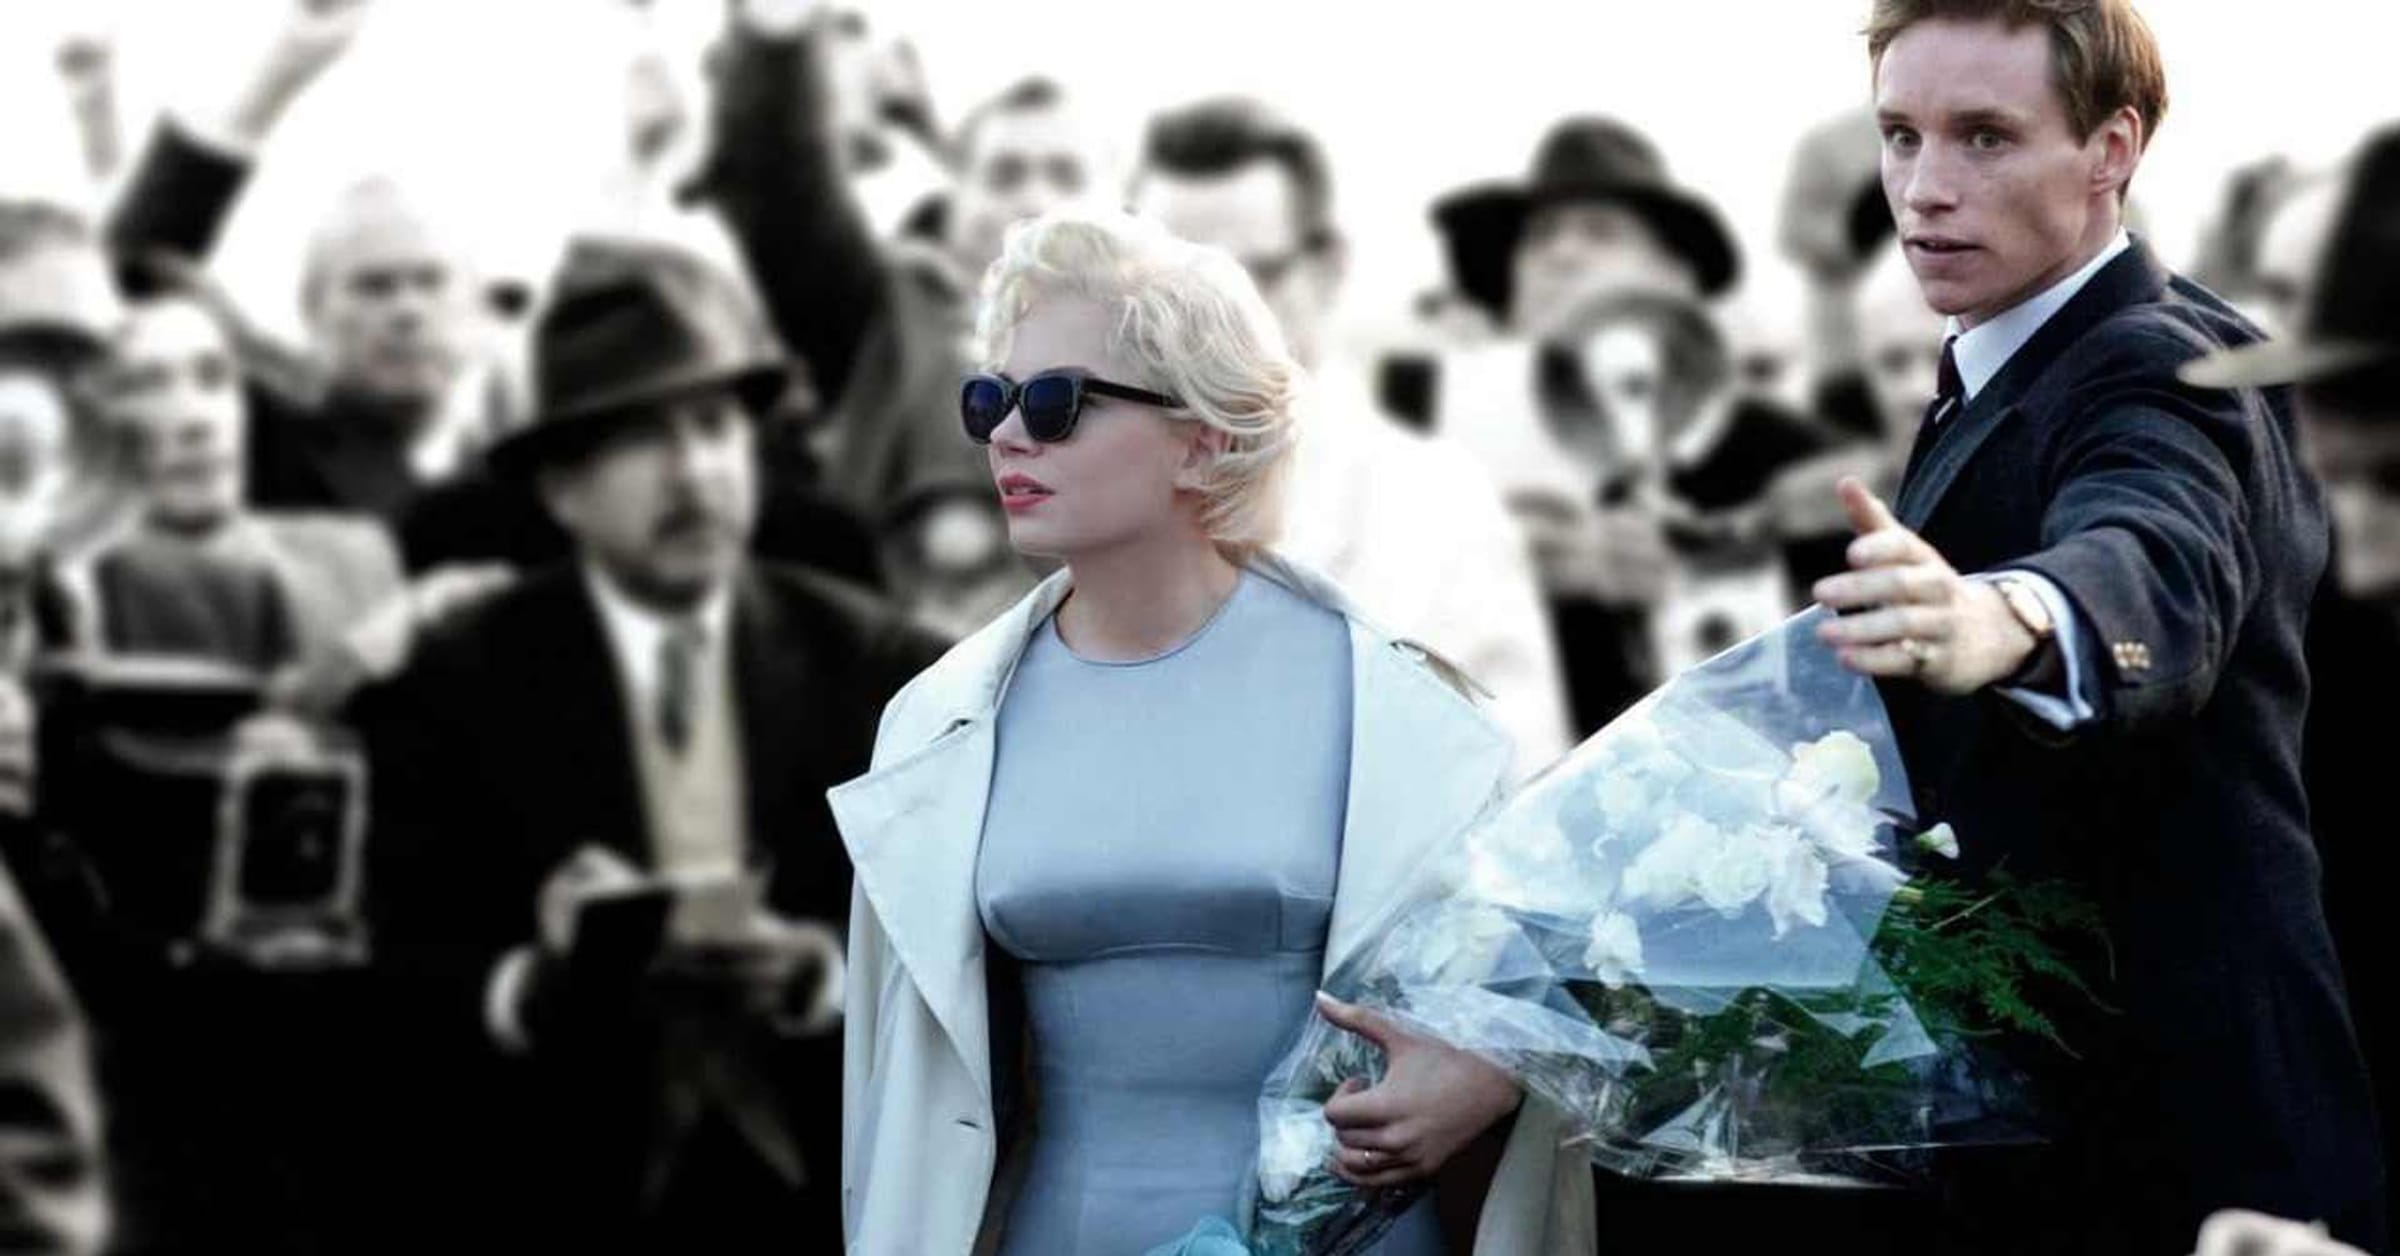 Marilyn Monroe: The Final Days (TV Movie 2001) - IMDb